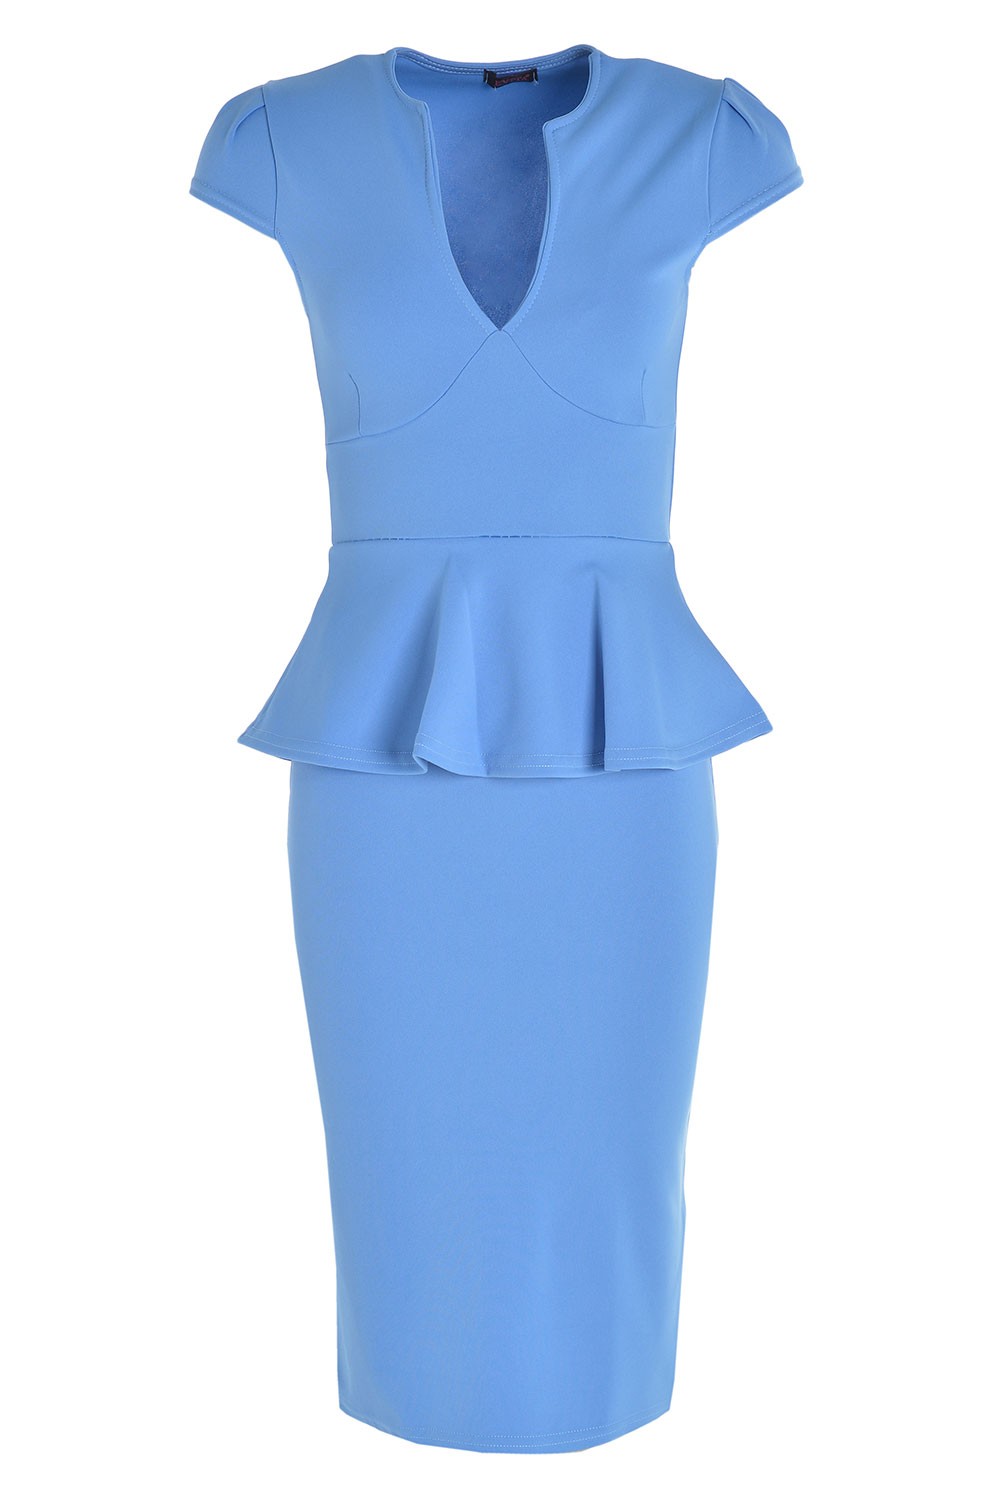 Evita Bianca Peplum Midi Dress in Sky Blue | iCLOTHING